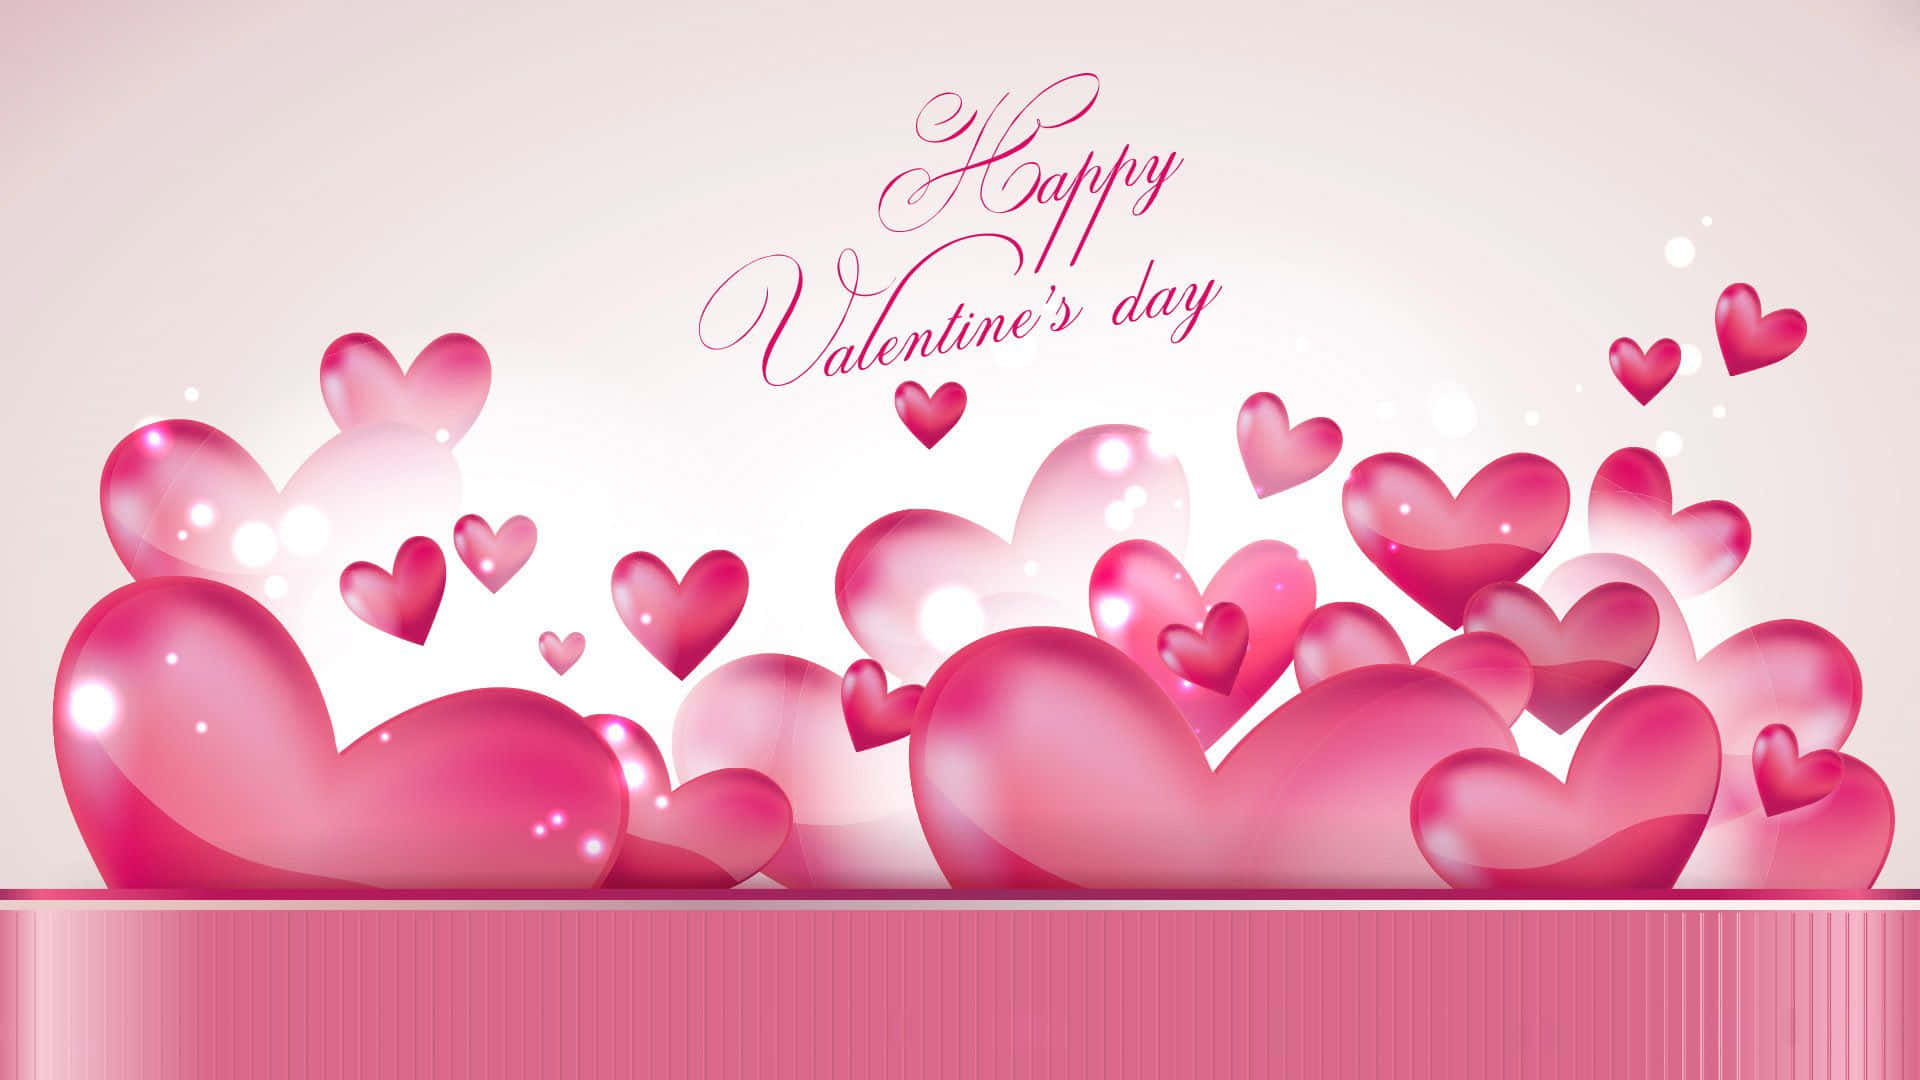 Celebrate the love on Valentine's Day